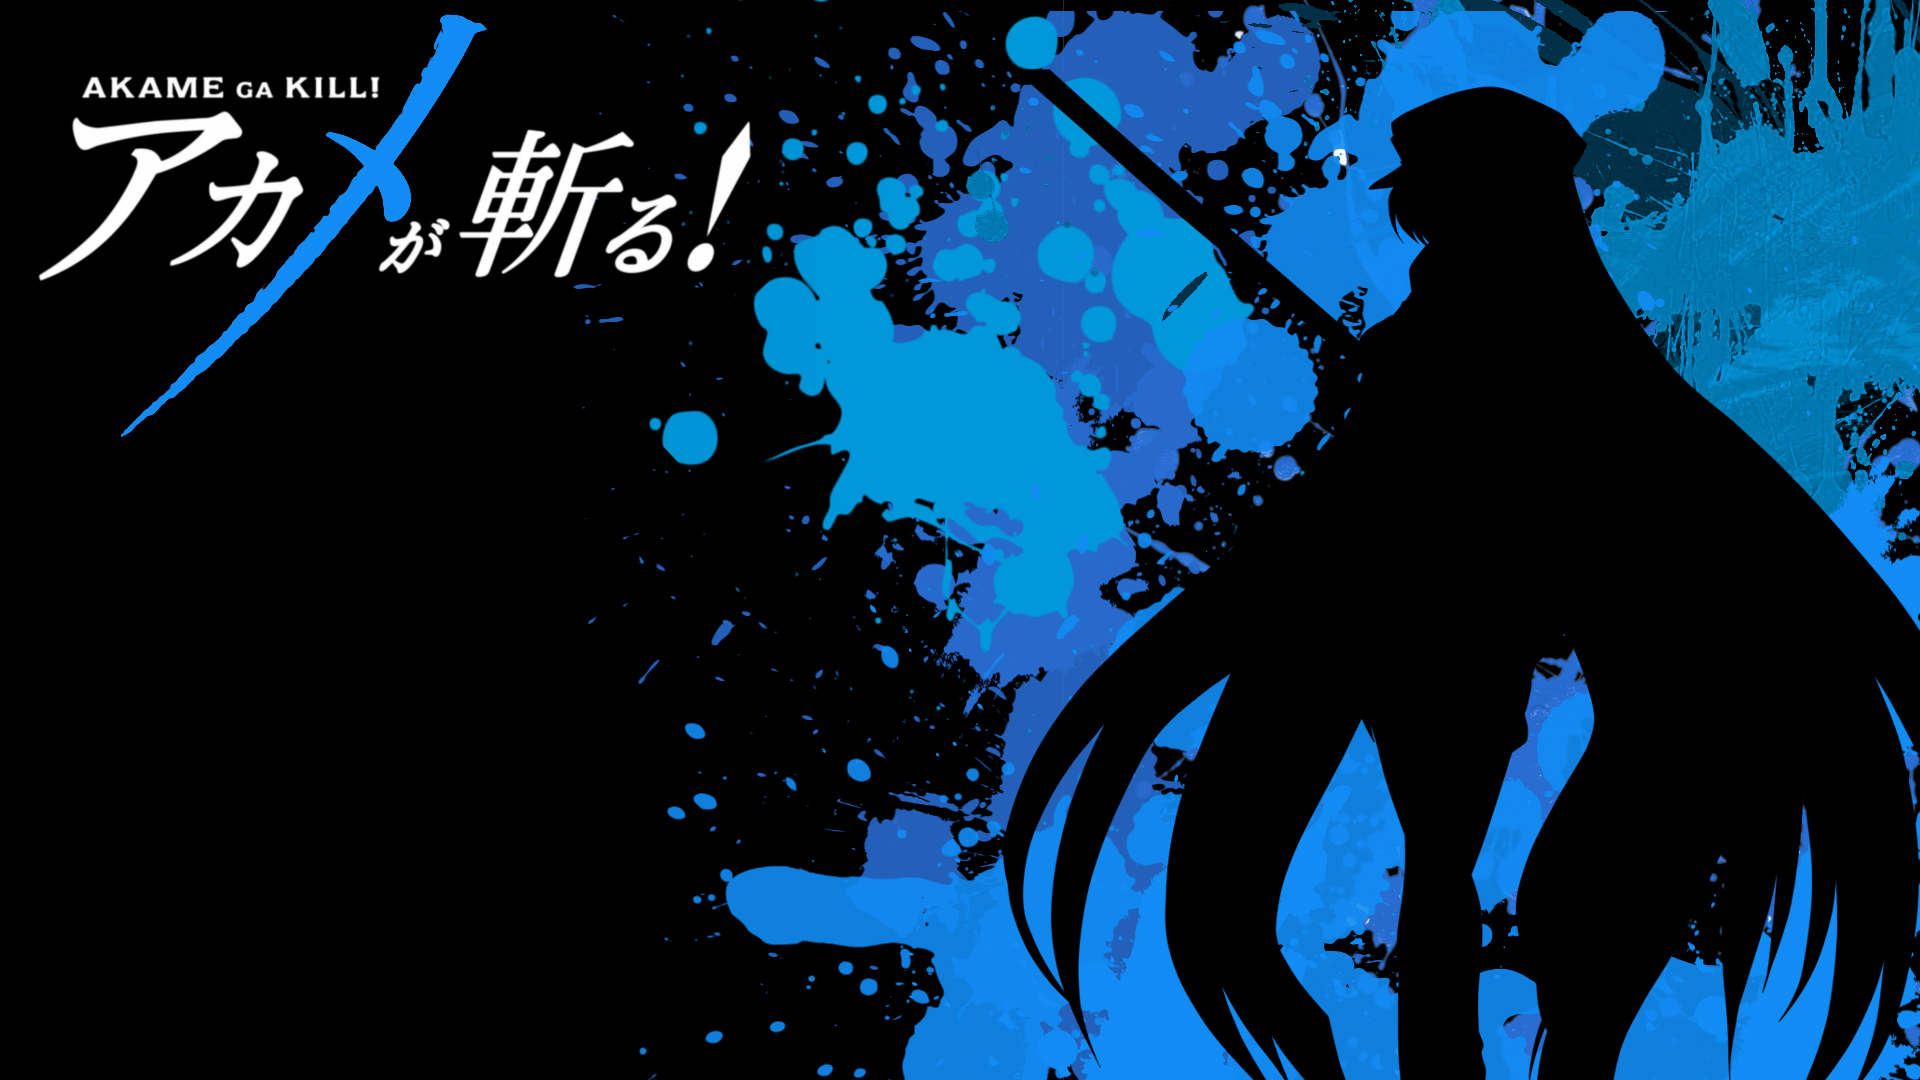 Akame Ga Kill Awesome Wallpaper HD Desktop Image